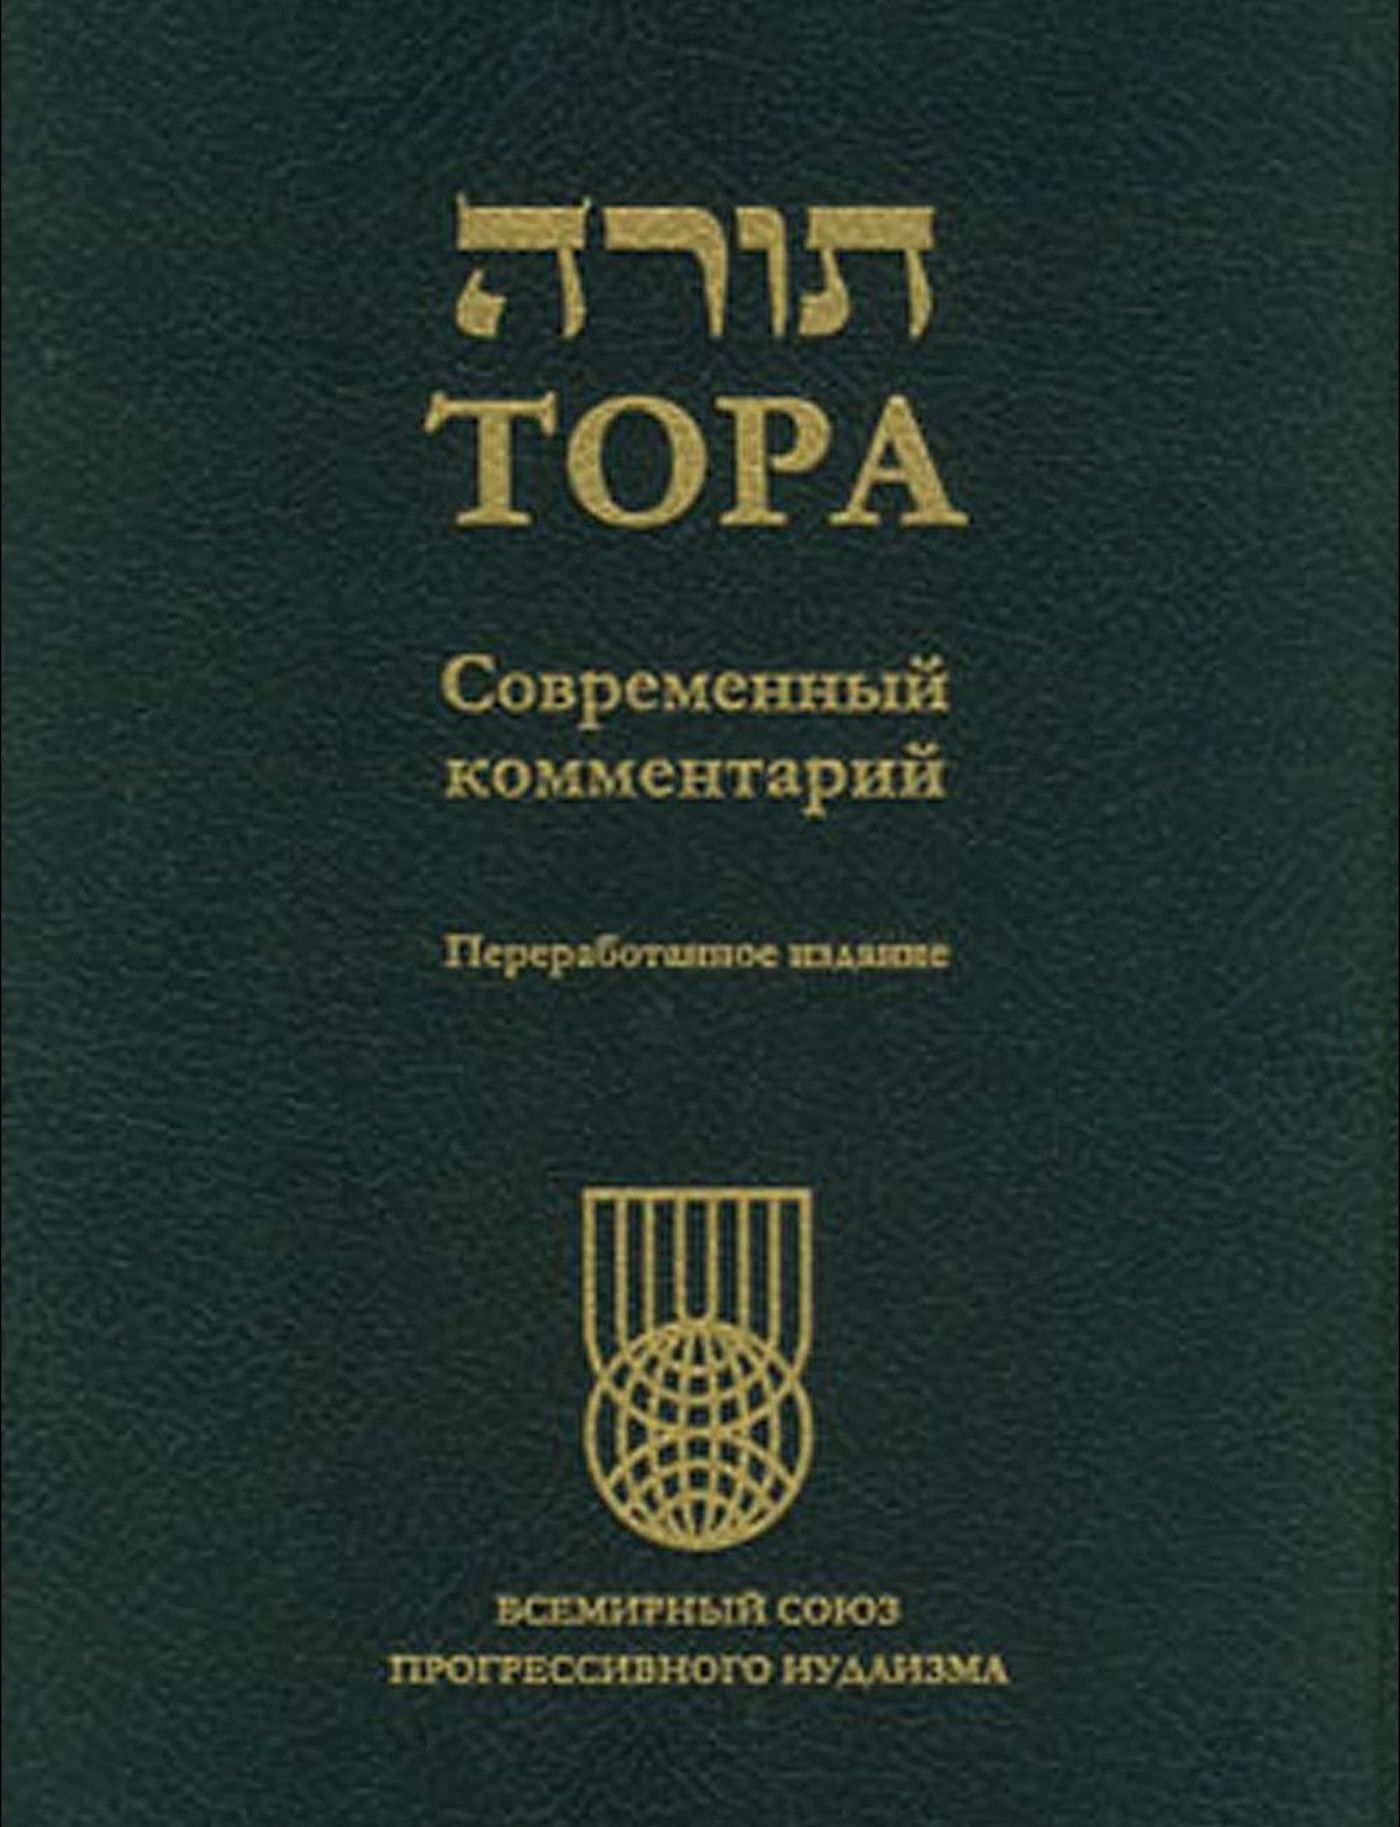 Torah, Revised Edition, Russian Translation